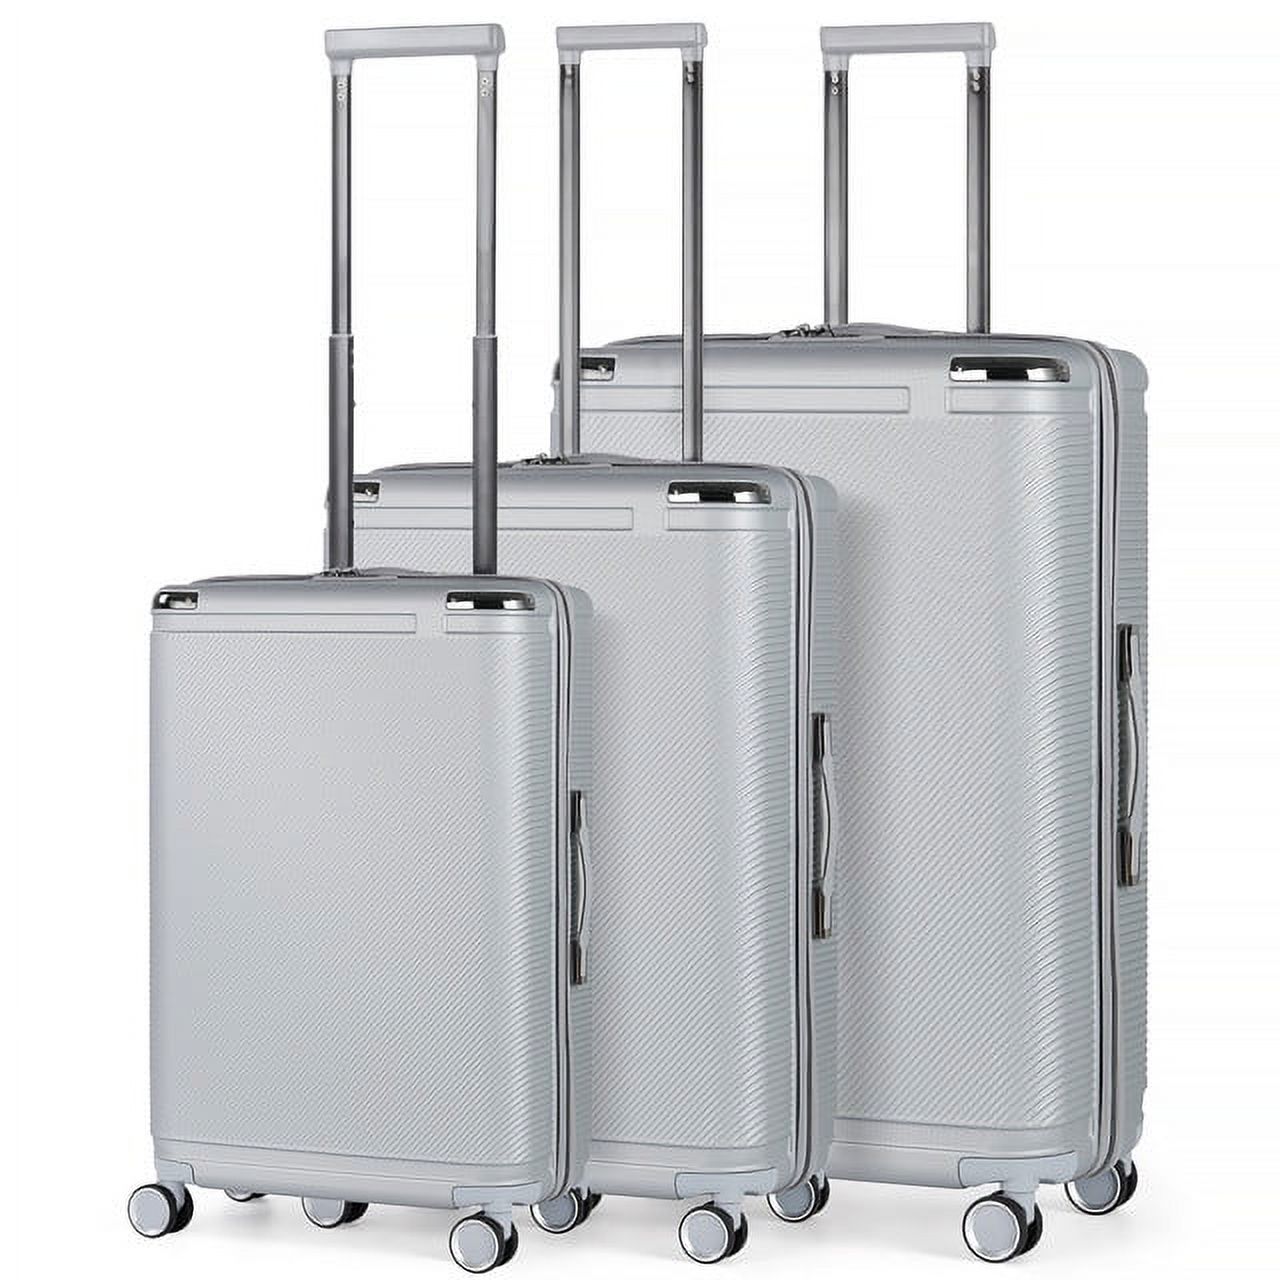 Hikolayae Dorado Collection Hardside Spinner Luggage Sets in Silver, 3 Piece - TSA Lock - image 1 of 9